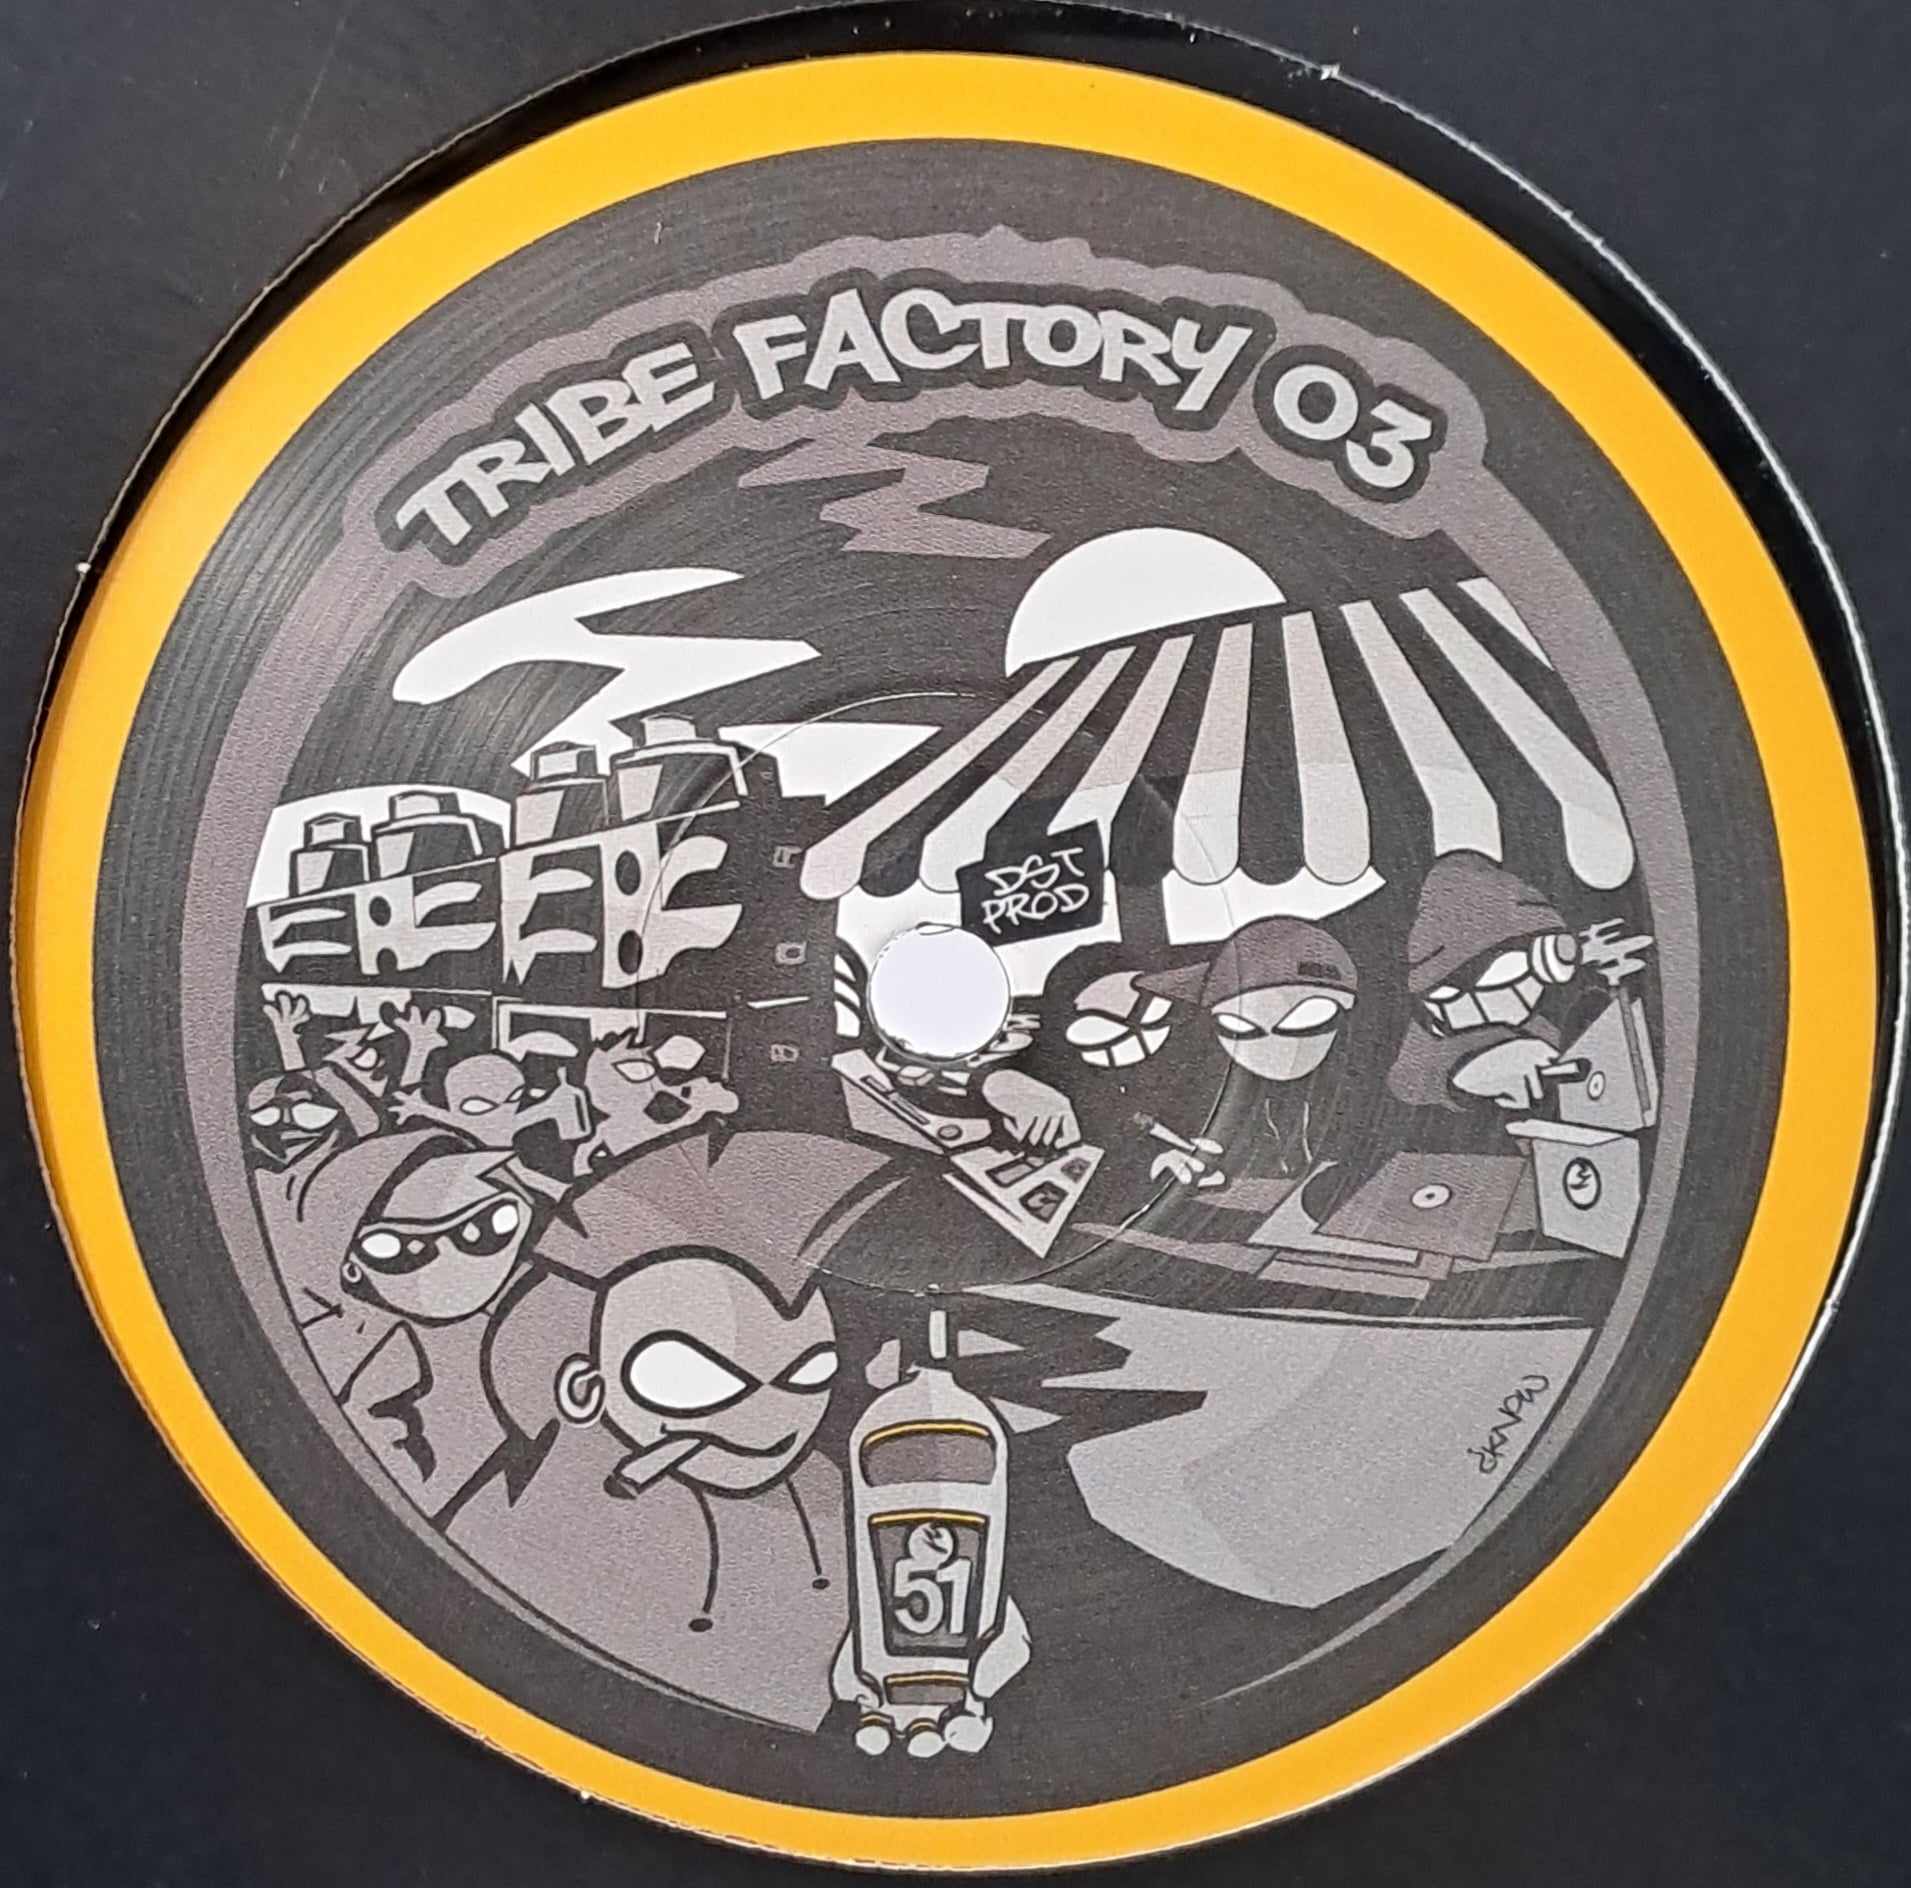 Tribe Factory 03 - vinyle freetekno